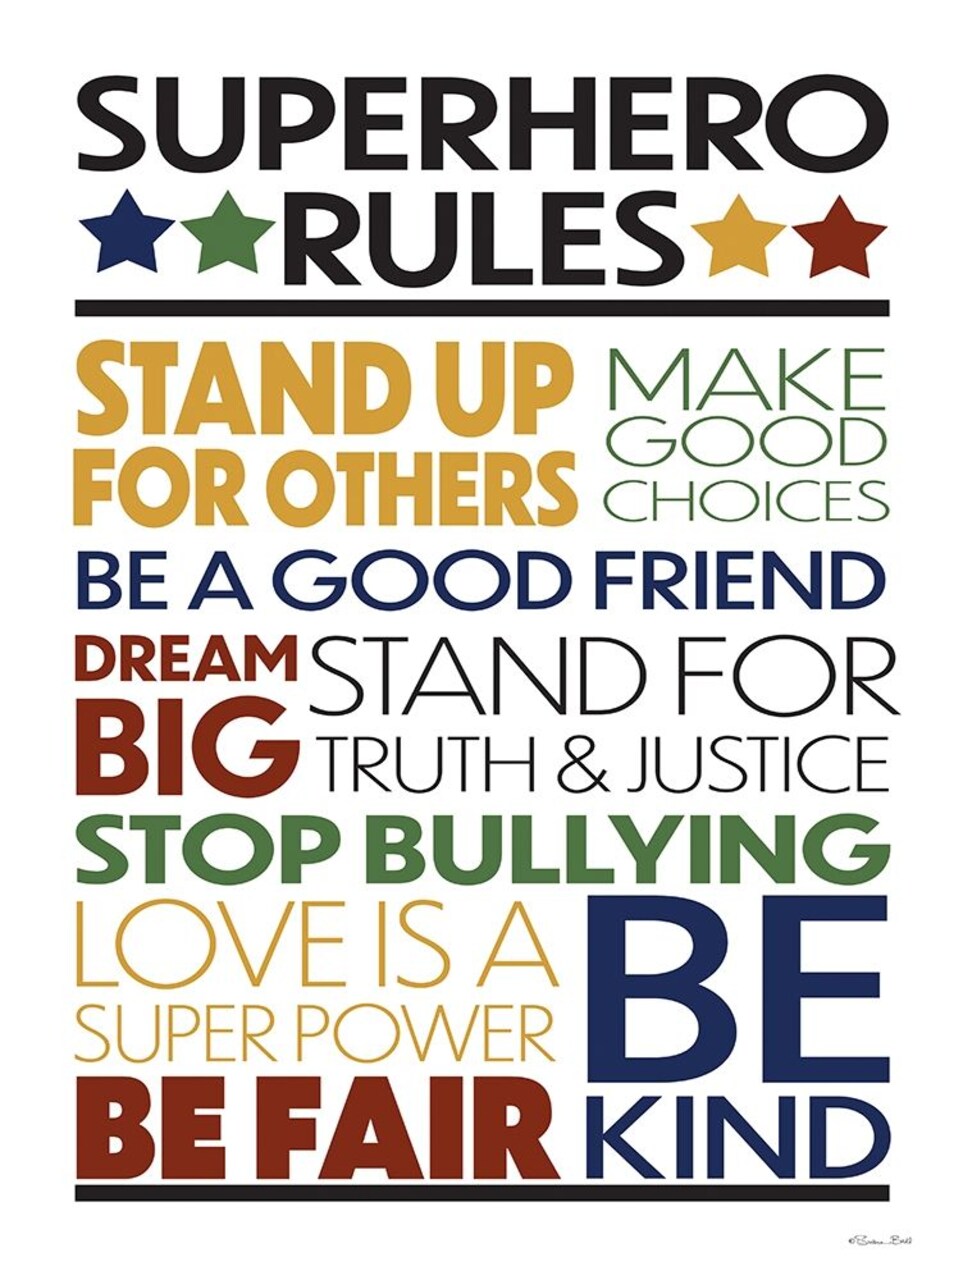 Superhero Rules Poster Print by Susan Ball # SB771